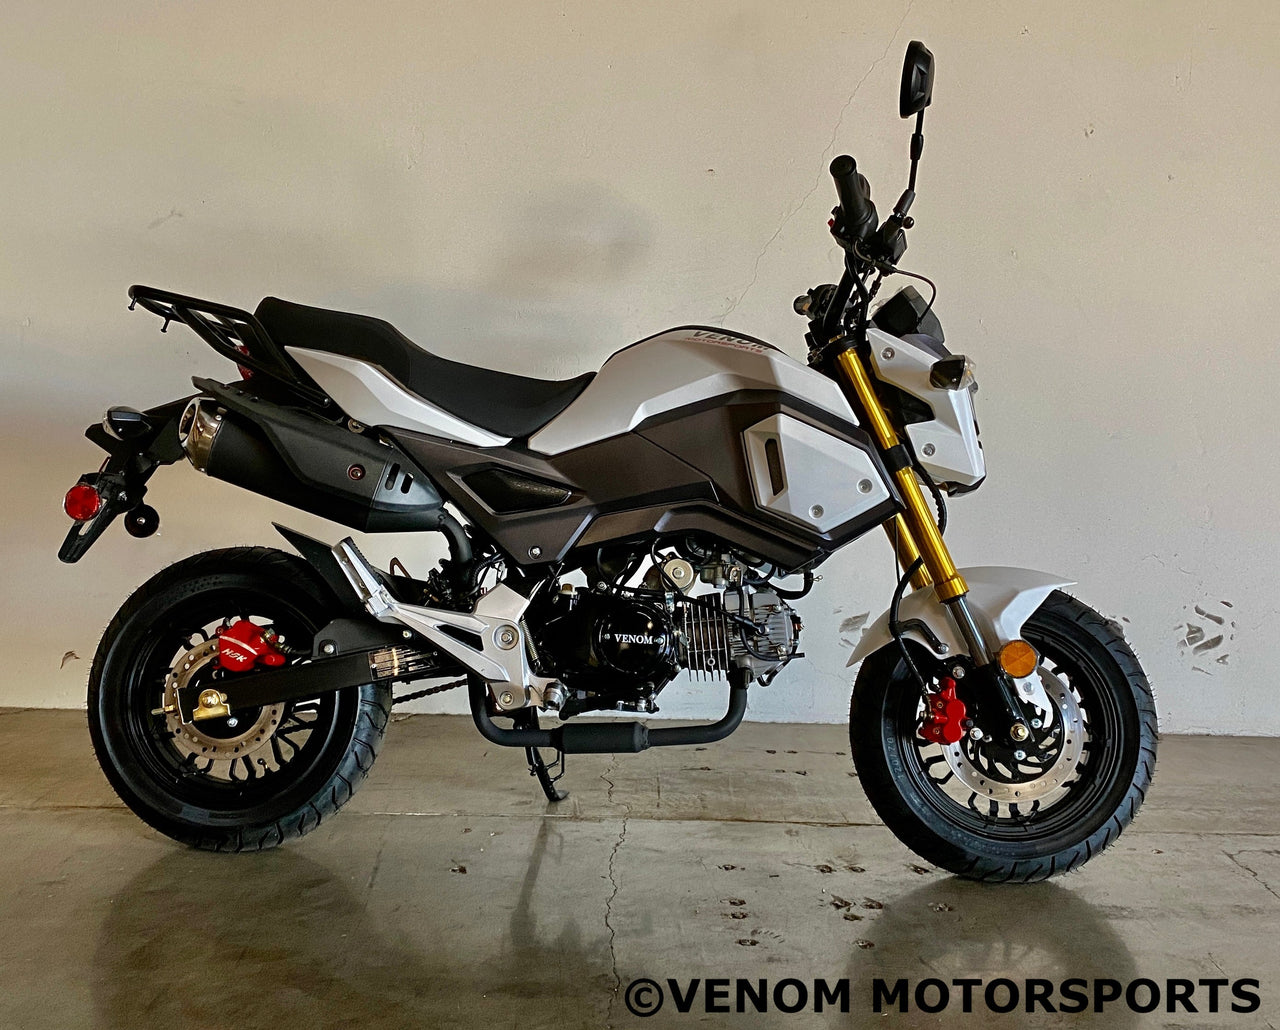 Venom x20 | 125cc Super Pocket Bike | Off-Road